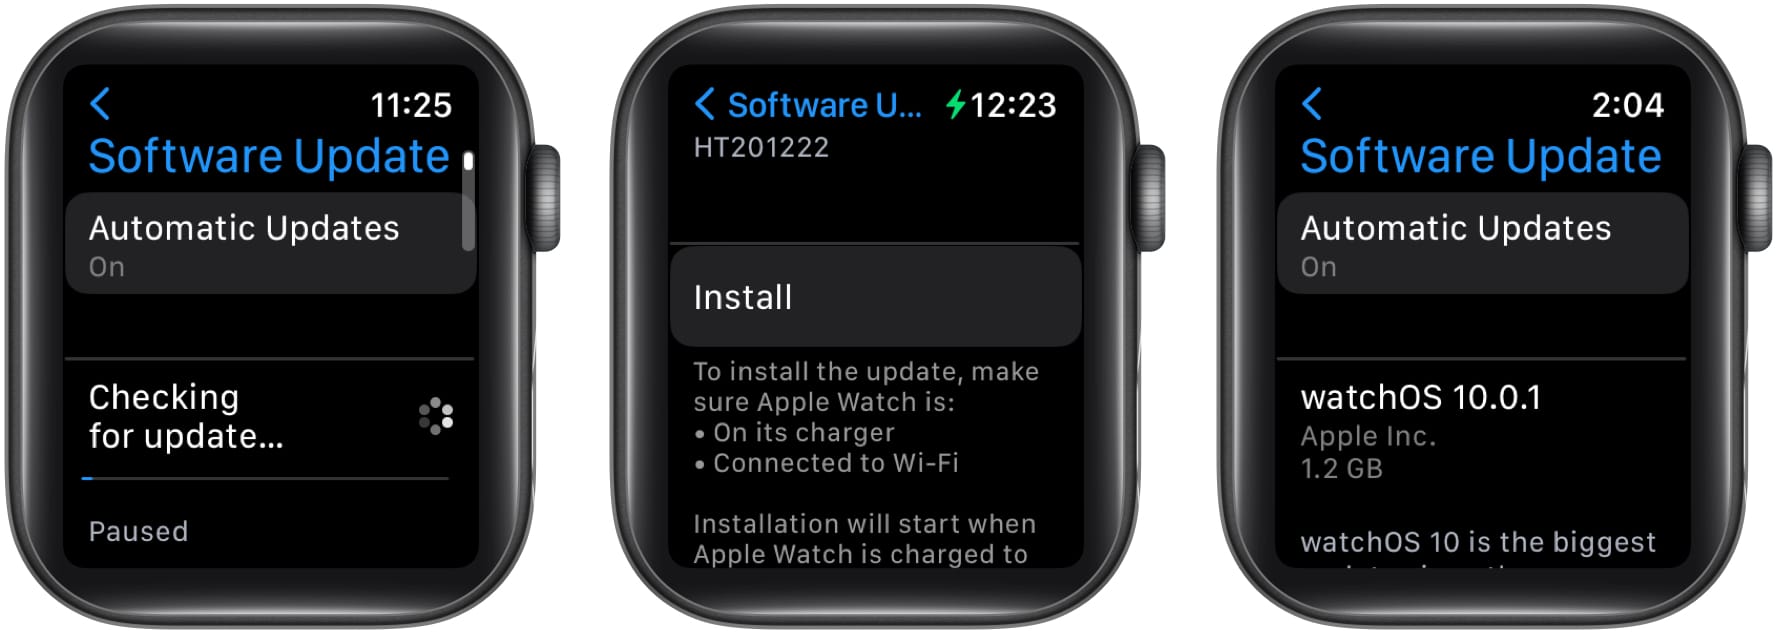 Install the watchOS 10 update in Apple Watch